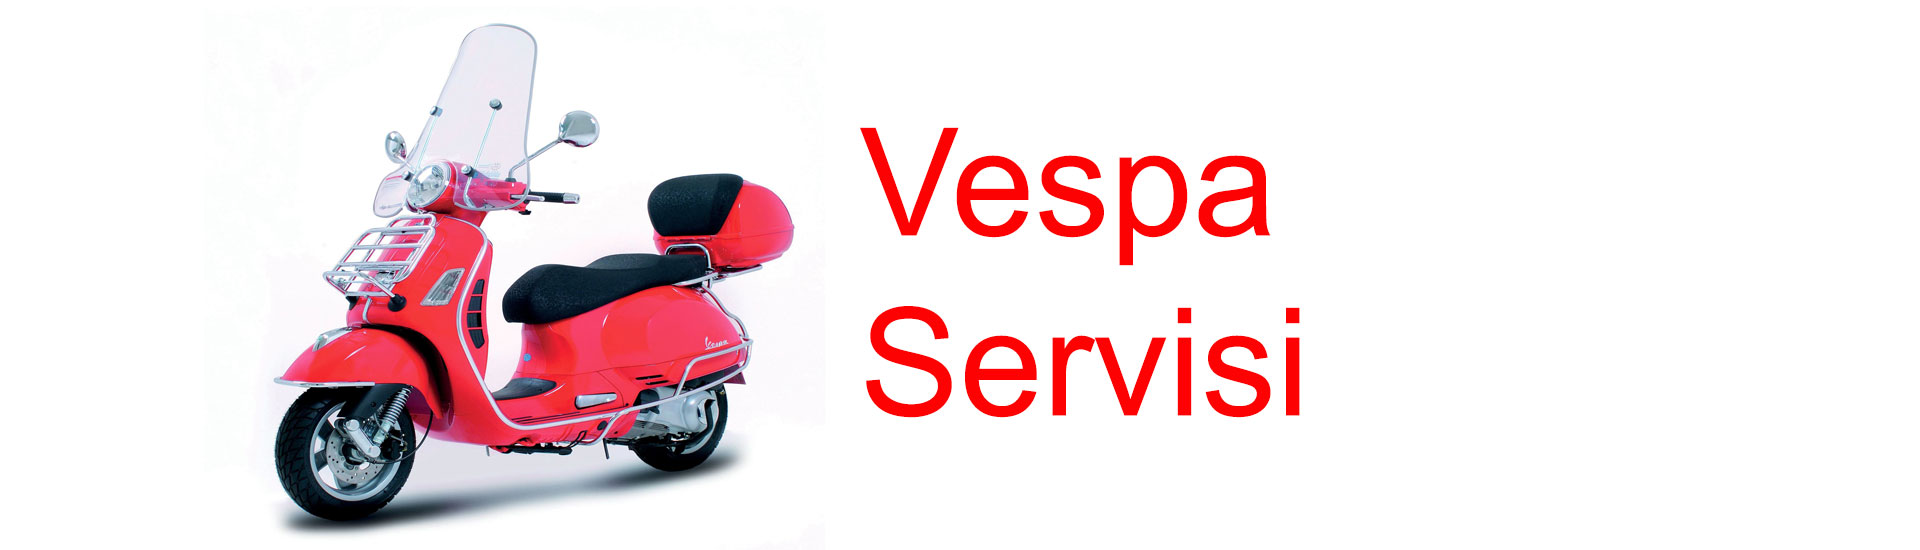 Vespa Motor Servisi 4